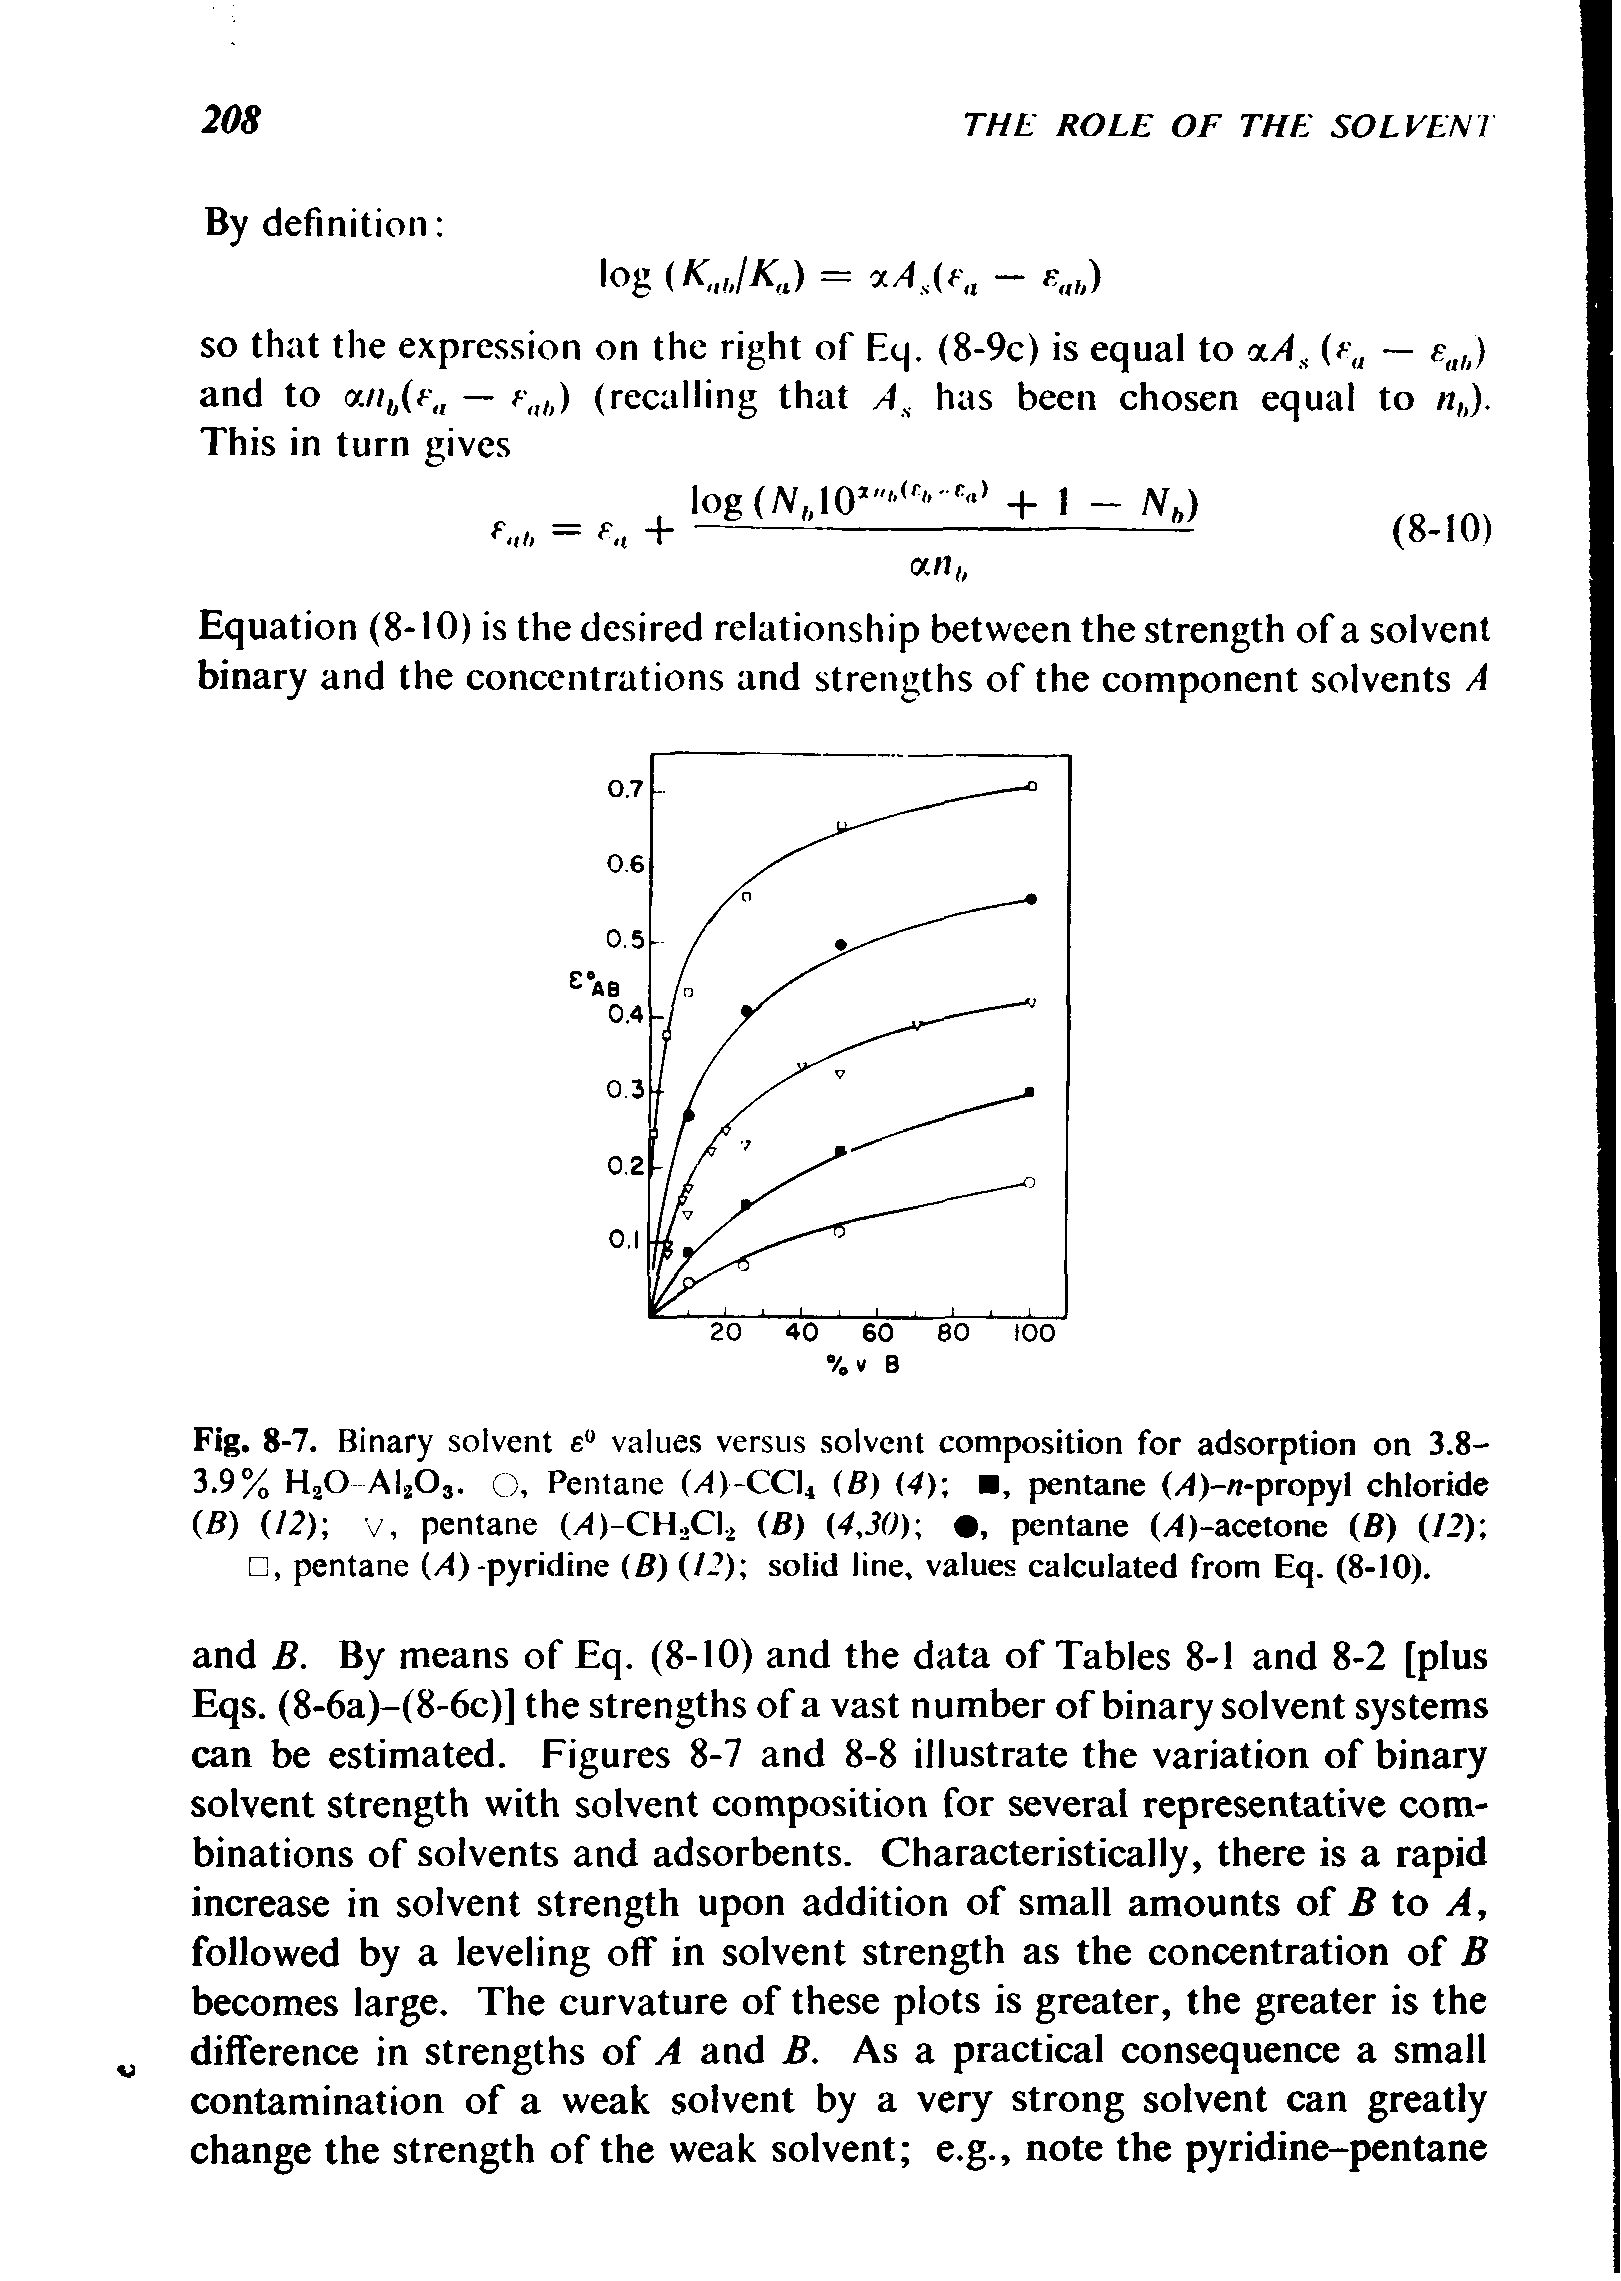 Fig. 8-7. Binary solvent e" values versus solvent composition for adsorption on 3.8-3.9% HjO AI2O3. O, Pentane (/()-CCIi (B) (4) , pentane (/t)-n-propyi chloride (B) (/2) V, pentane (/tj-CH.CI, (B) (4,30) , pentane (/l)-acetone (B) (I2) , pentane (/t)-pyridine (B) (12) solid line, values calculated from Eq. (8-10).